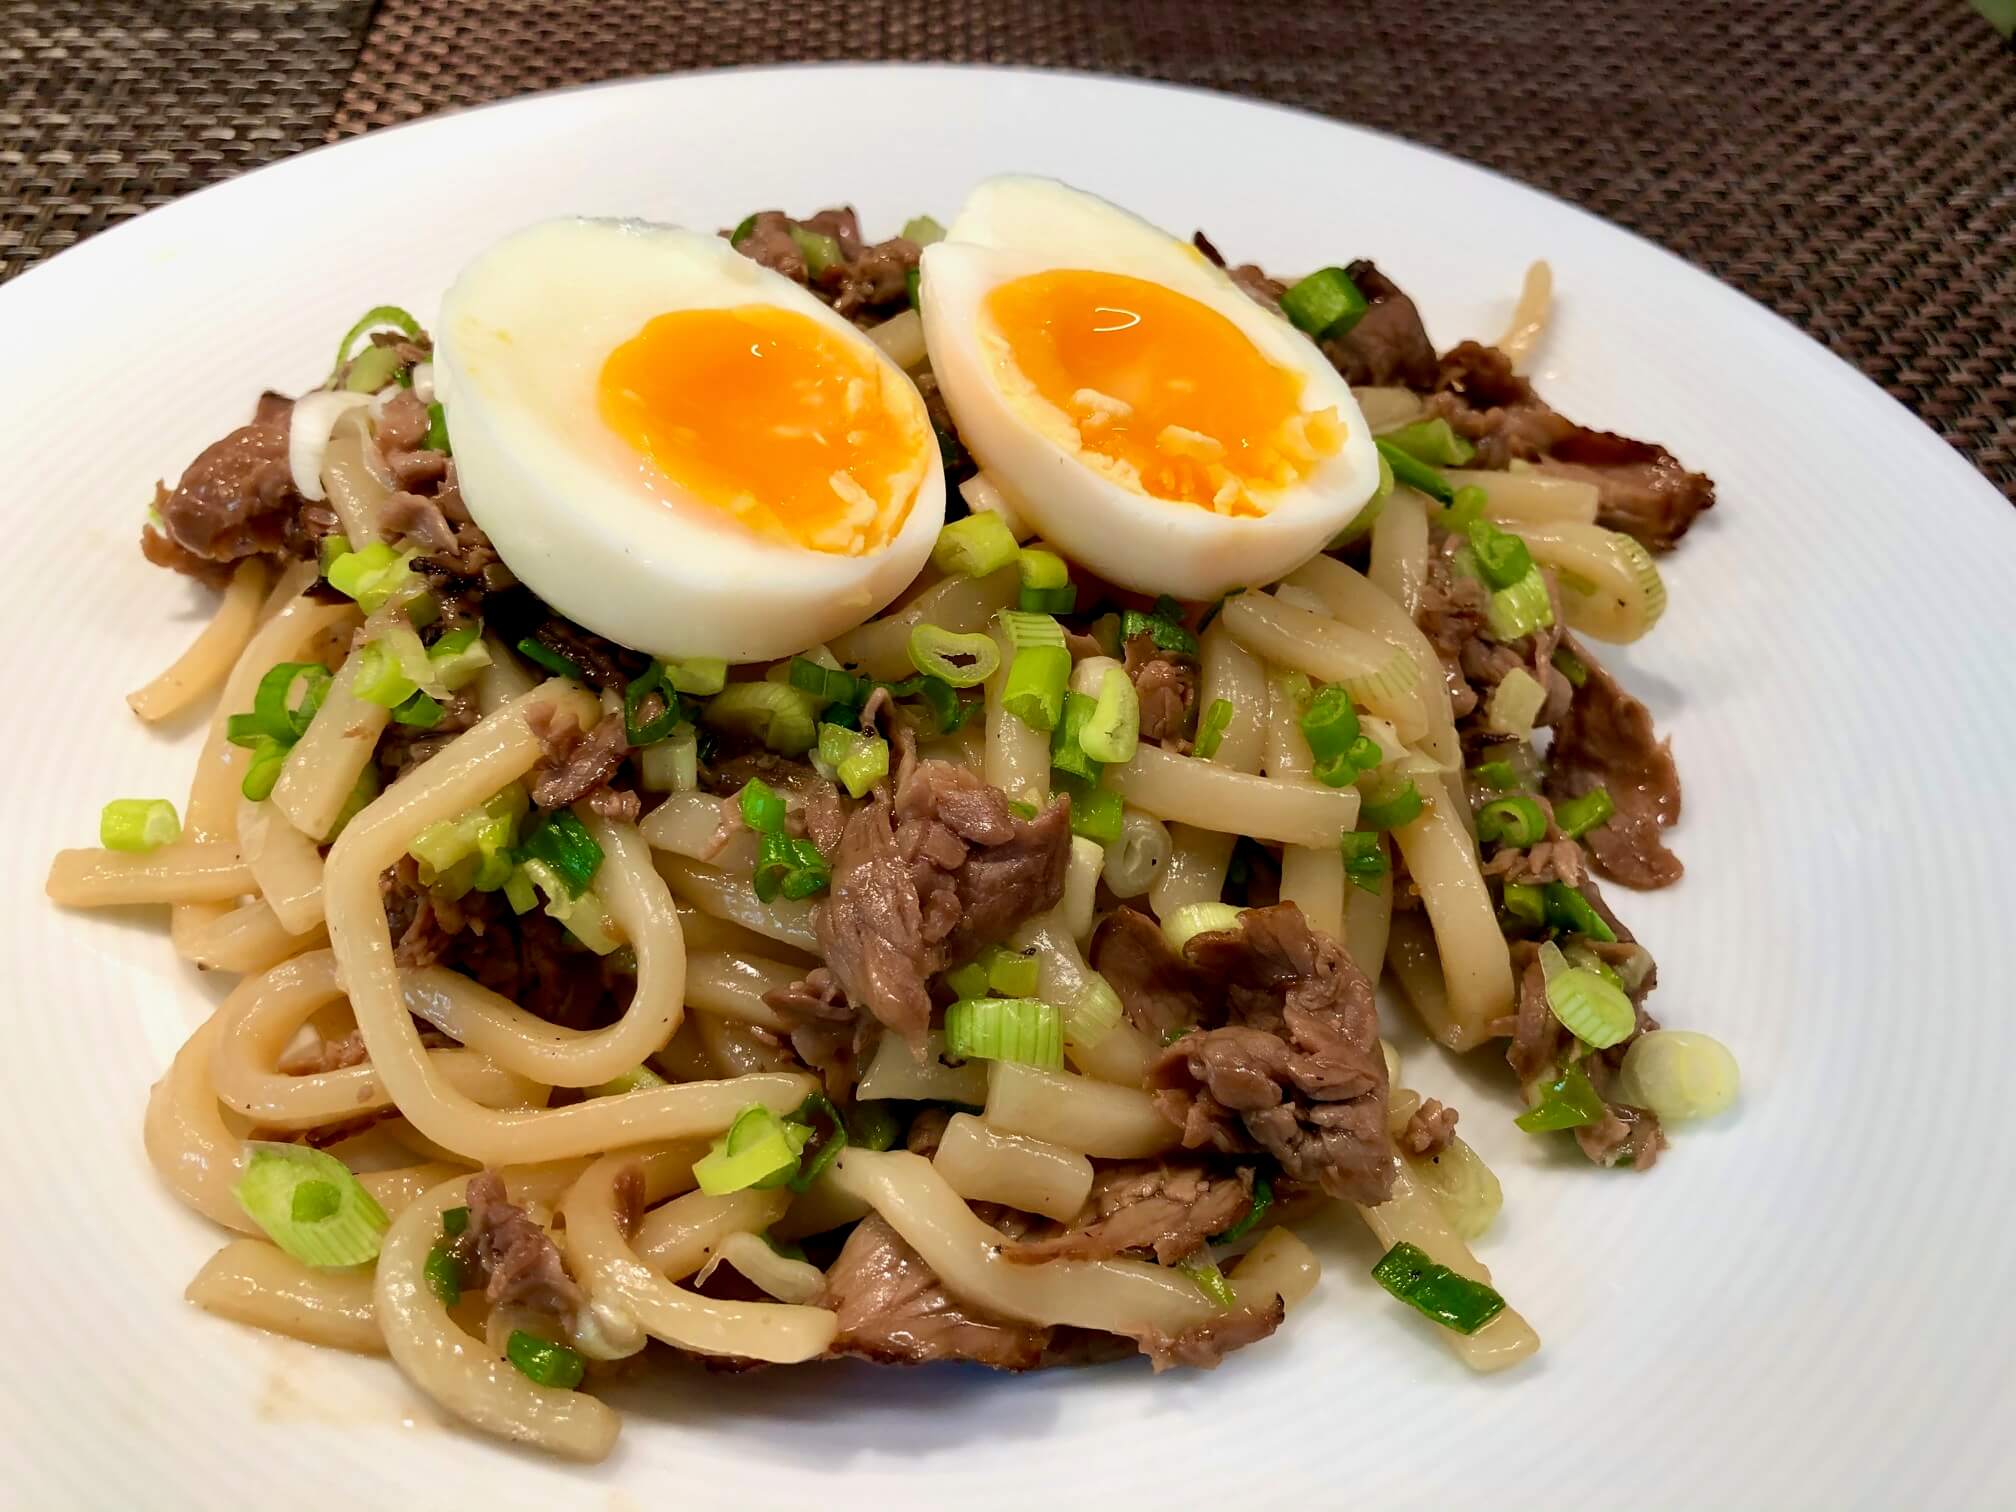 Yaki udon – stir fried noodles